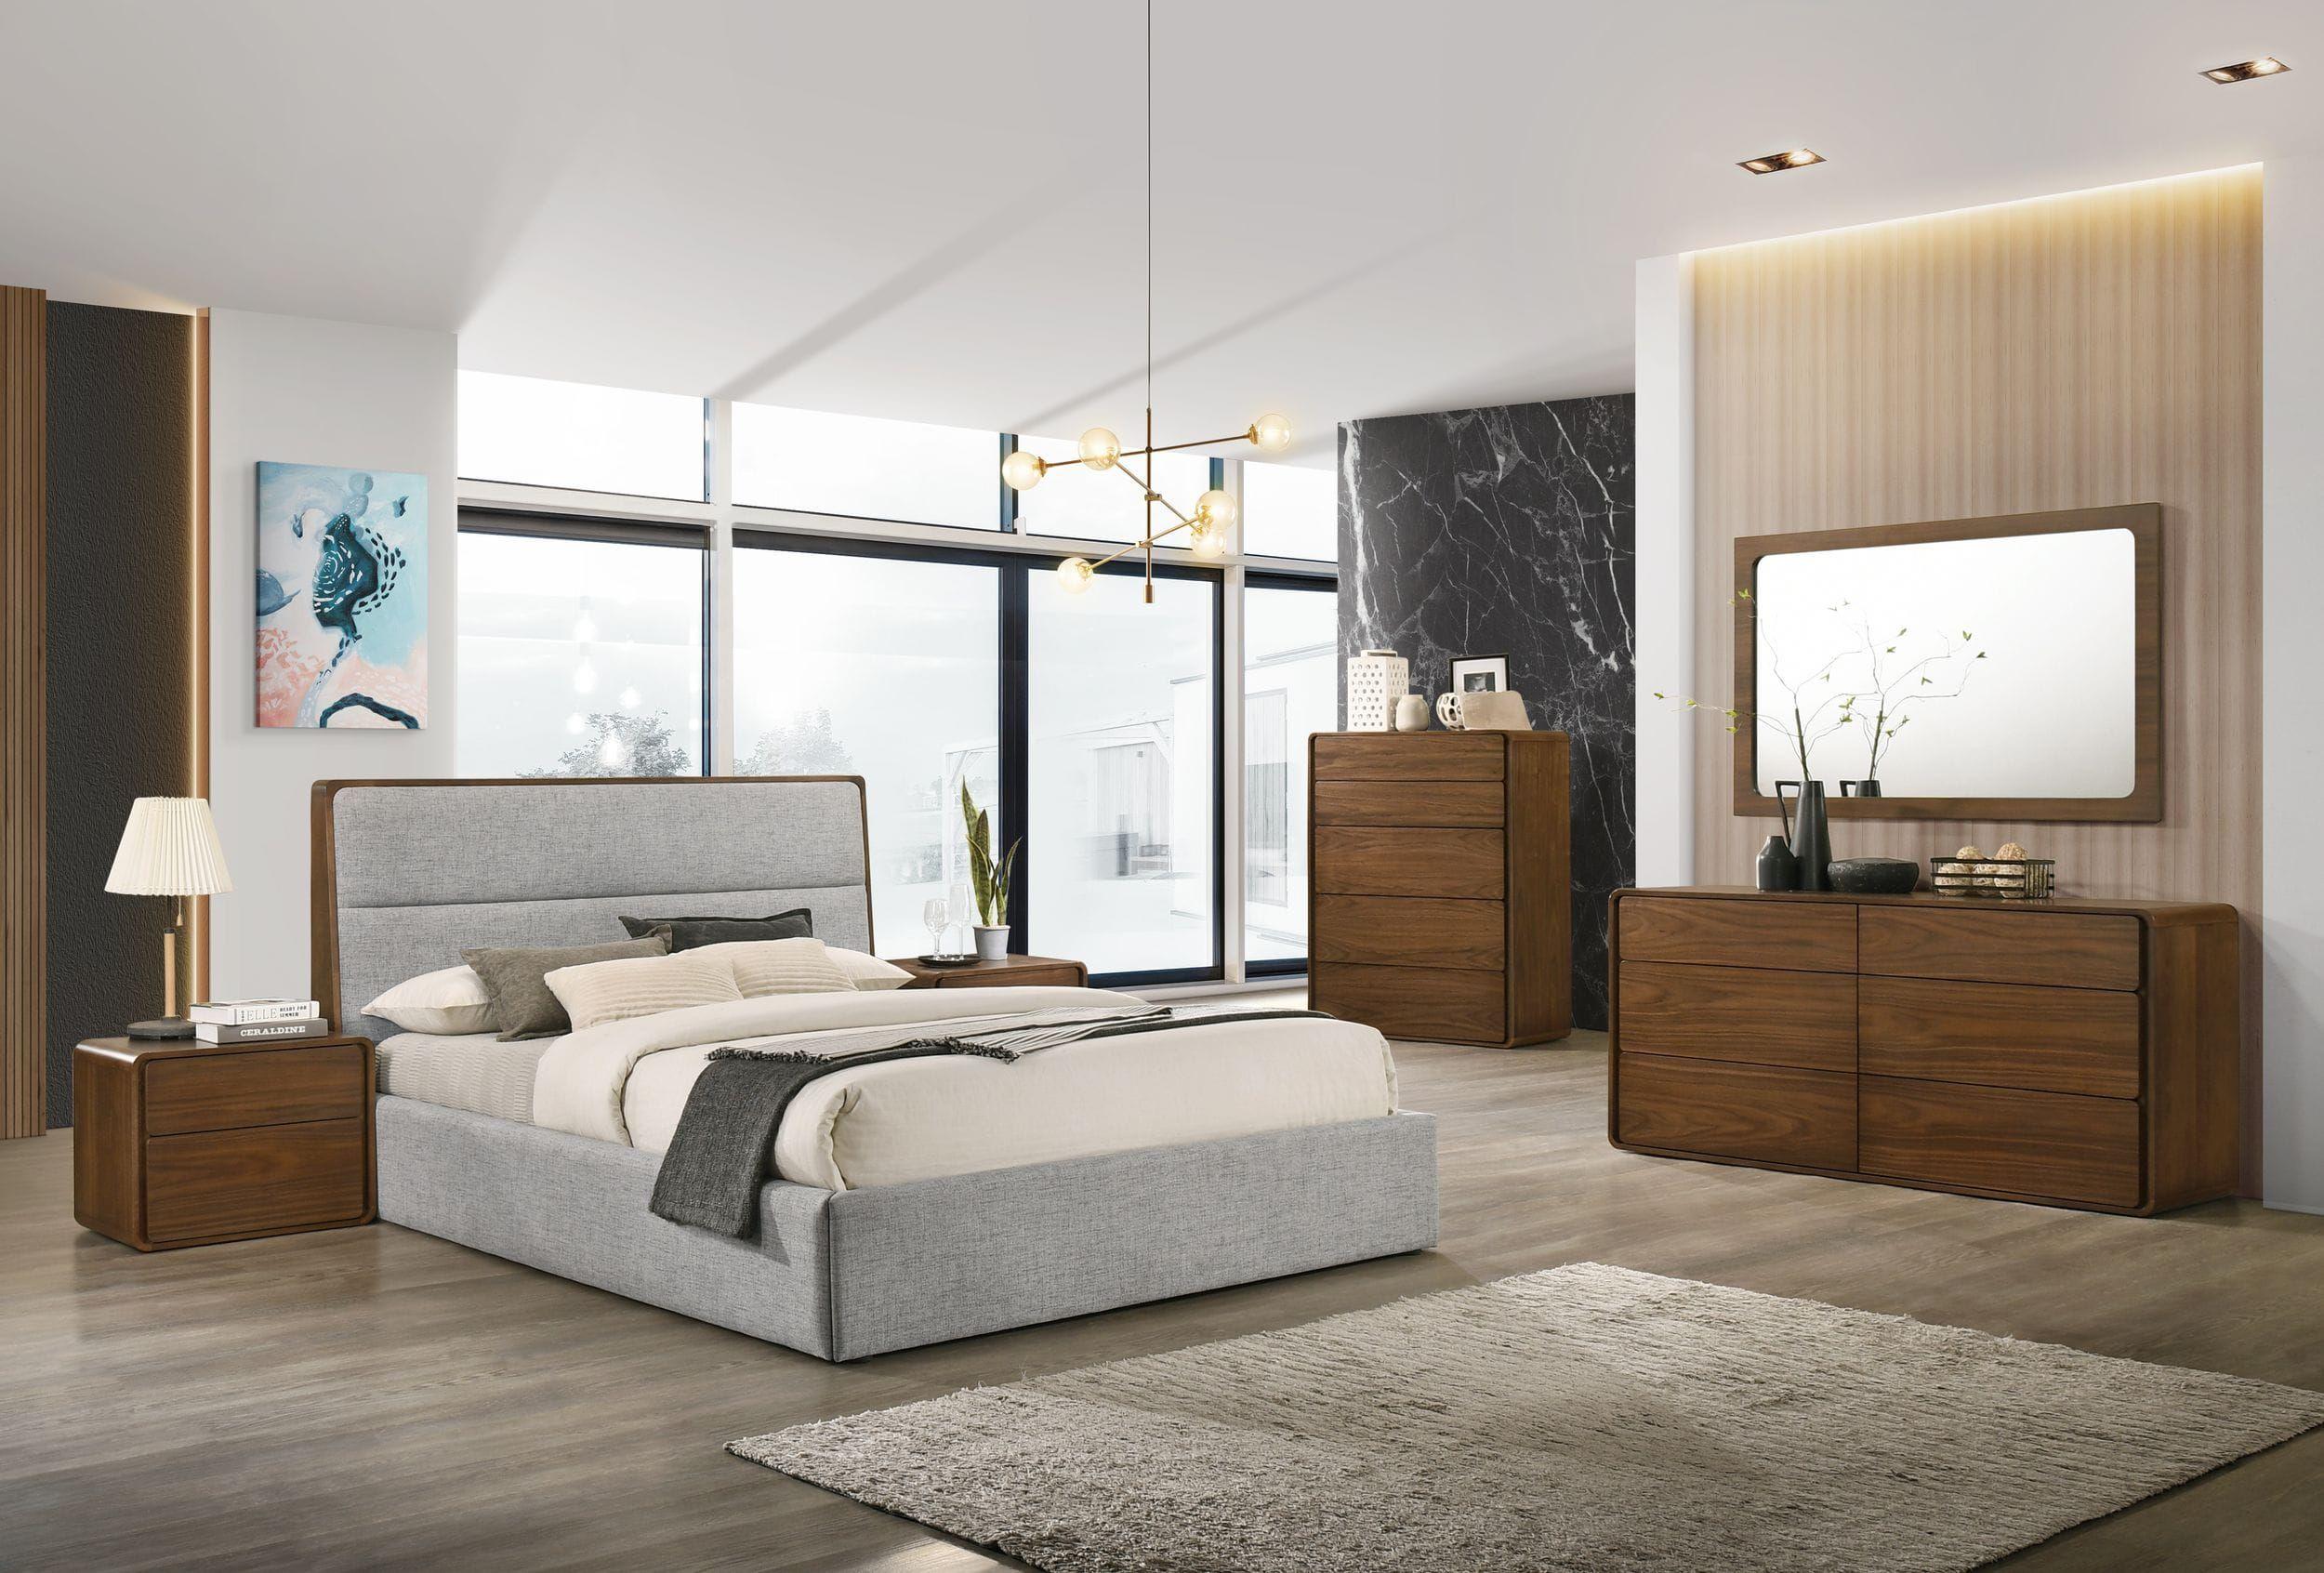 Contemporary, Modern Platform Bedroom Set Dustin VGMABR-99-BED-Q-5pcs in Walnut, Gray Fabric